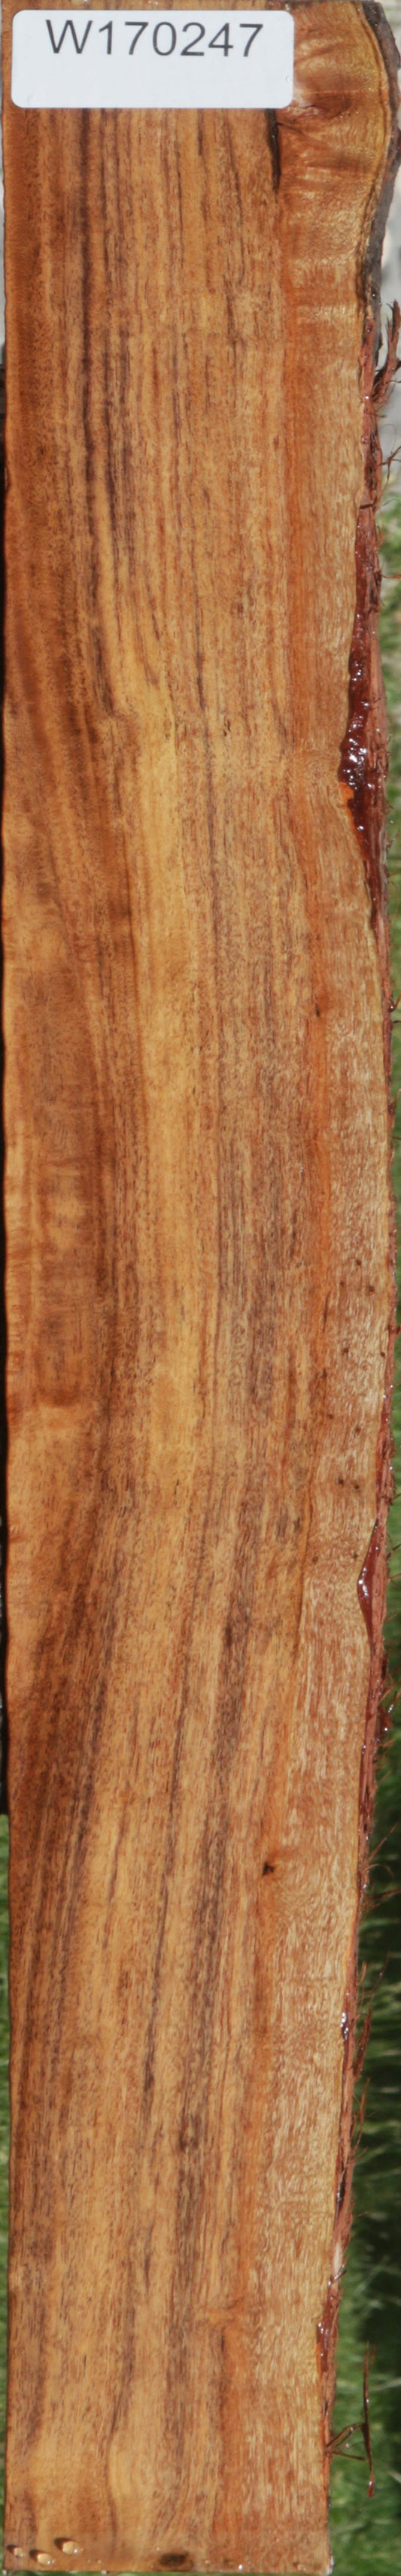 Figured Patagonian Rosewood Live Edge Lumber